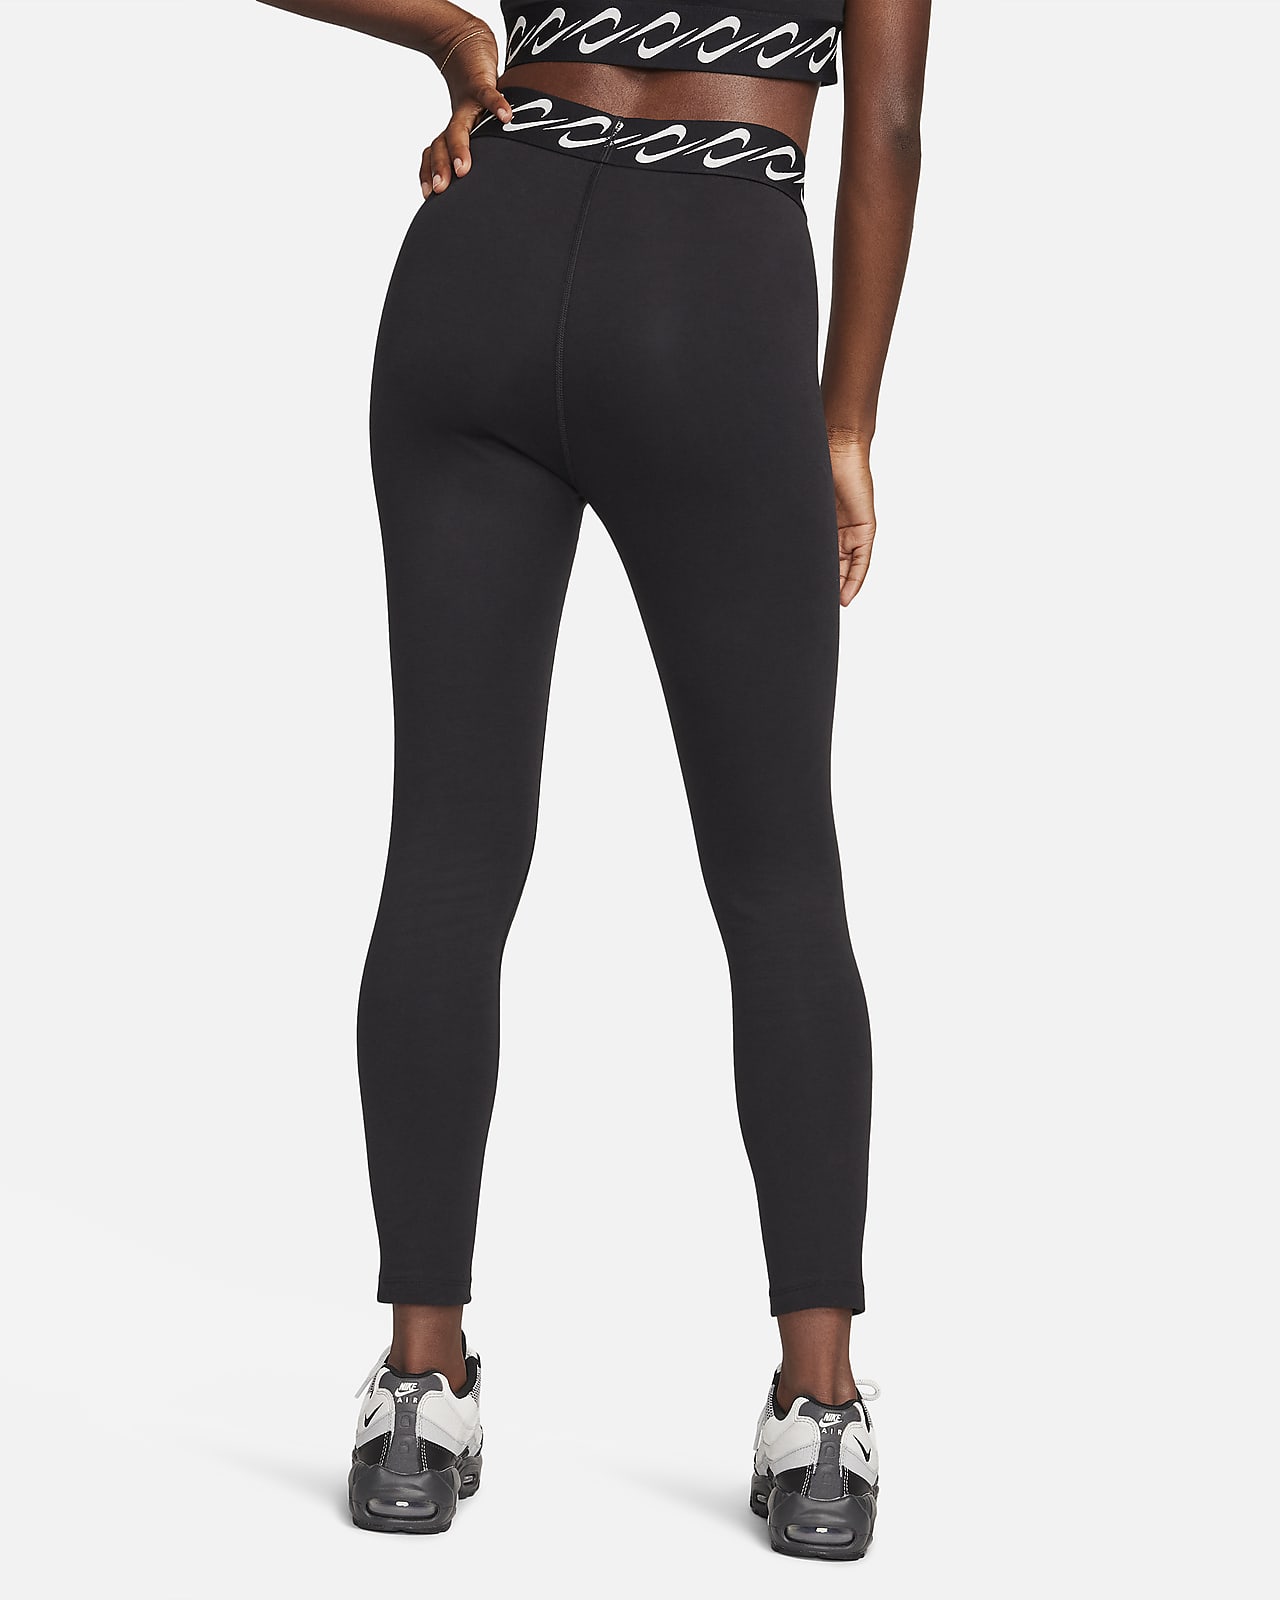 Nike Sportswear Women's Classics High-Waisted 7/8 Leggings Black / Sail